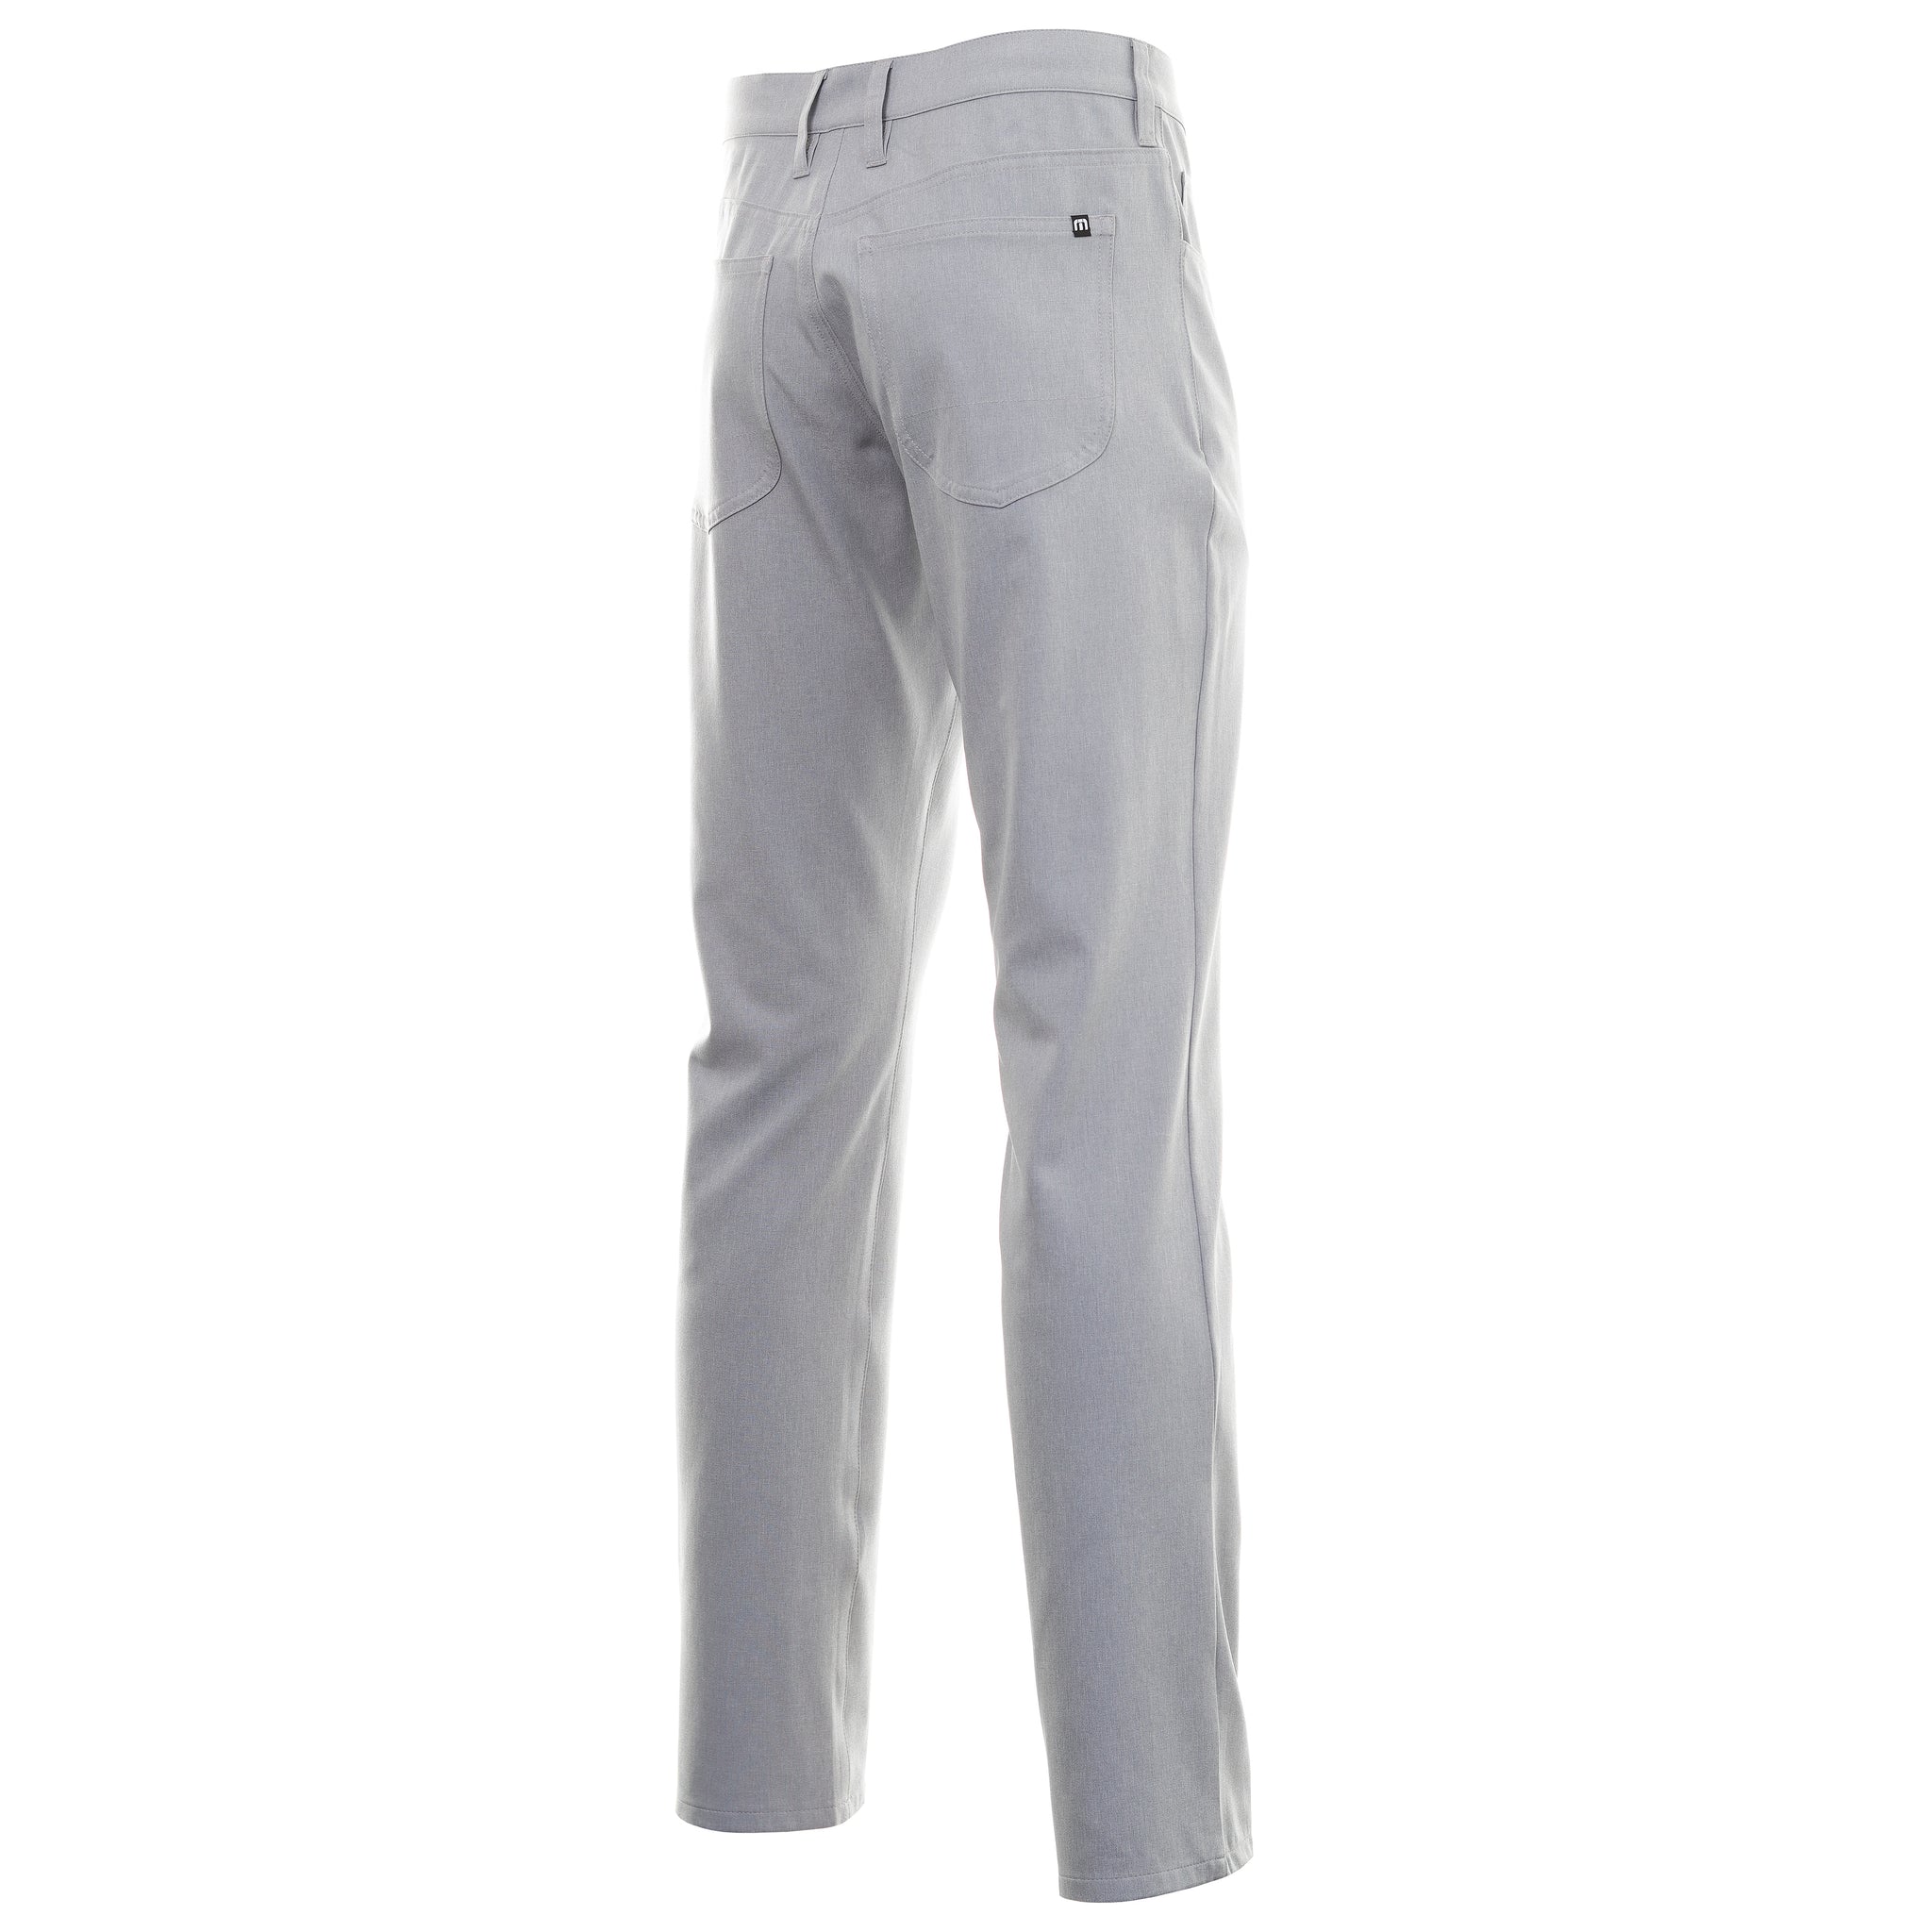 travismathew-open-to-close-trousers-1mt435-heather-sleet